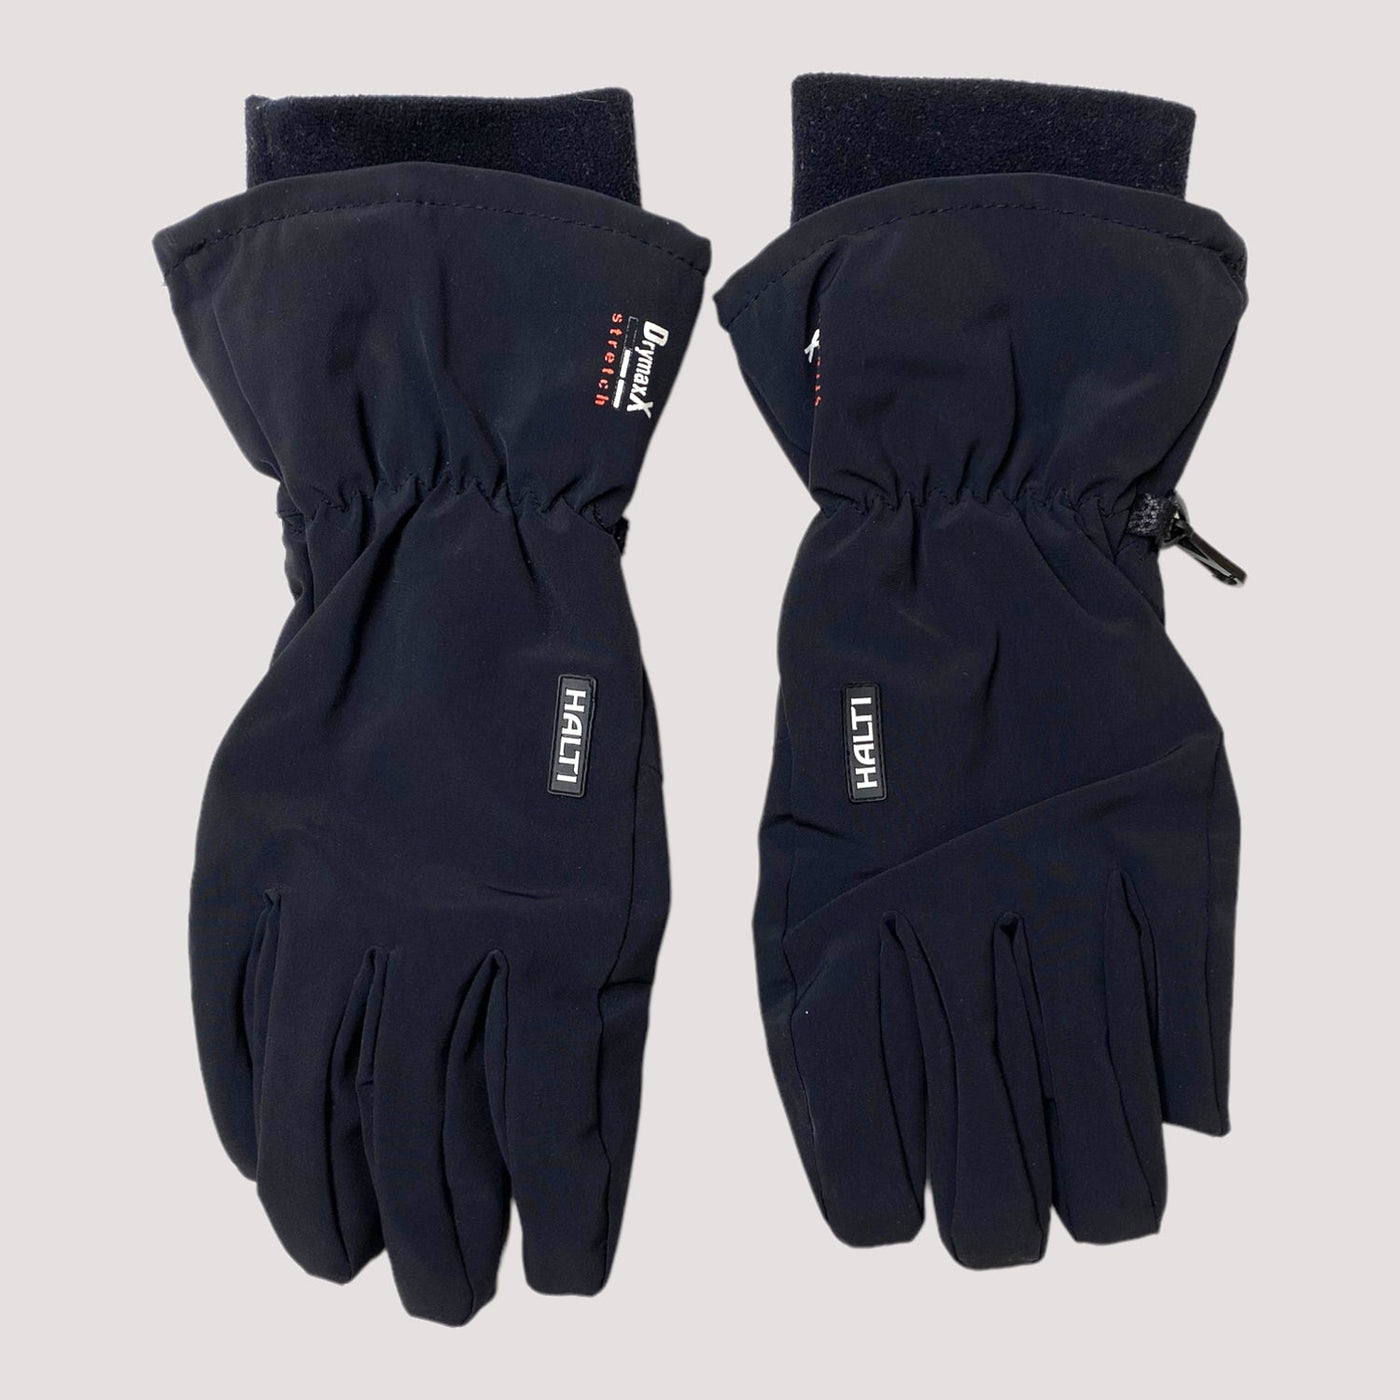 gloves, black | adults' size 10